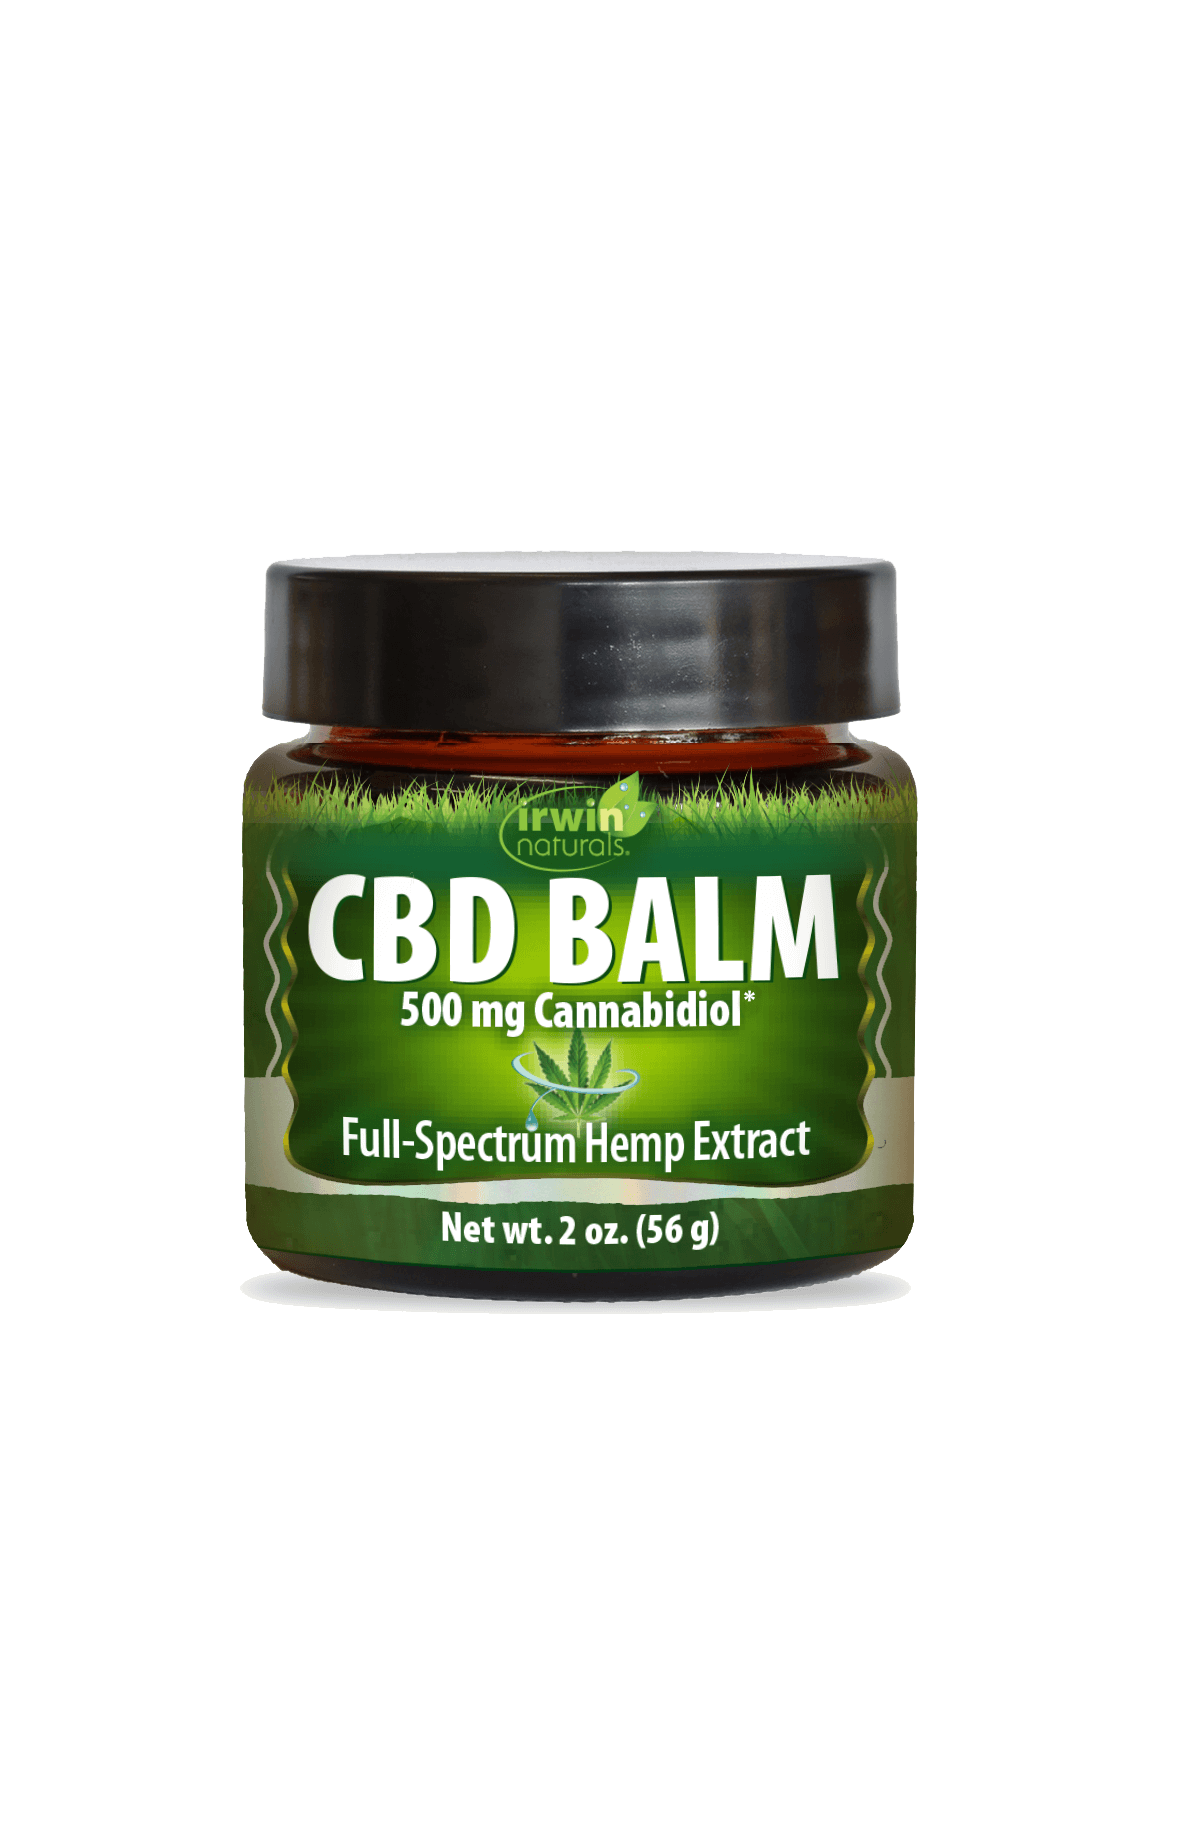 CBD Balm 500 mg Cannabidiol by Irwin Naturals